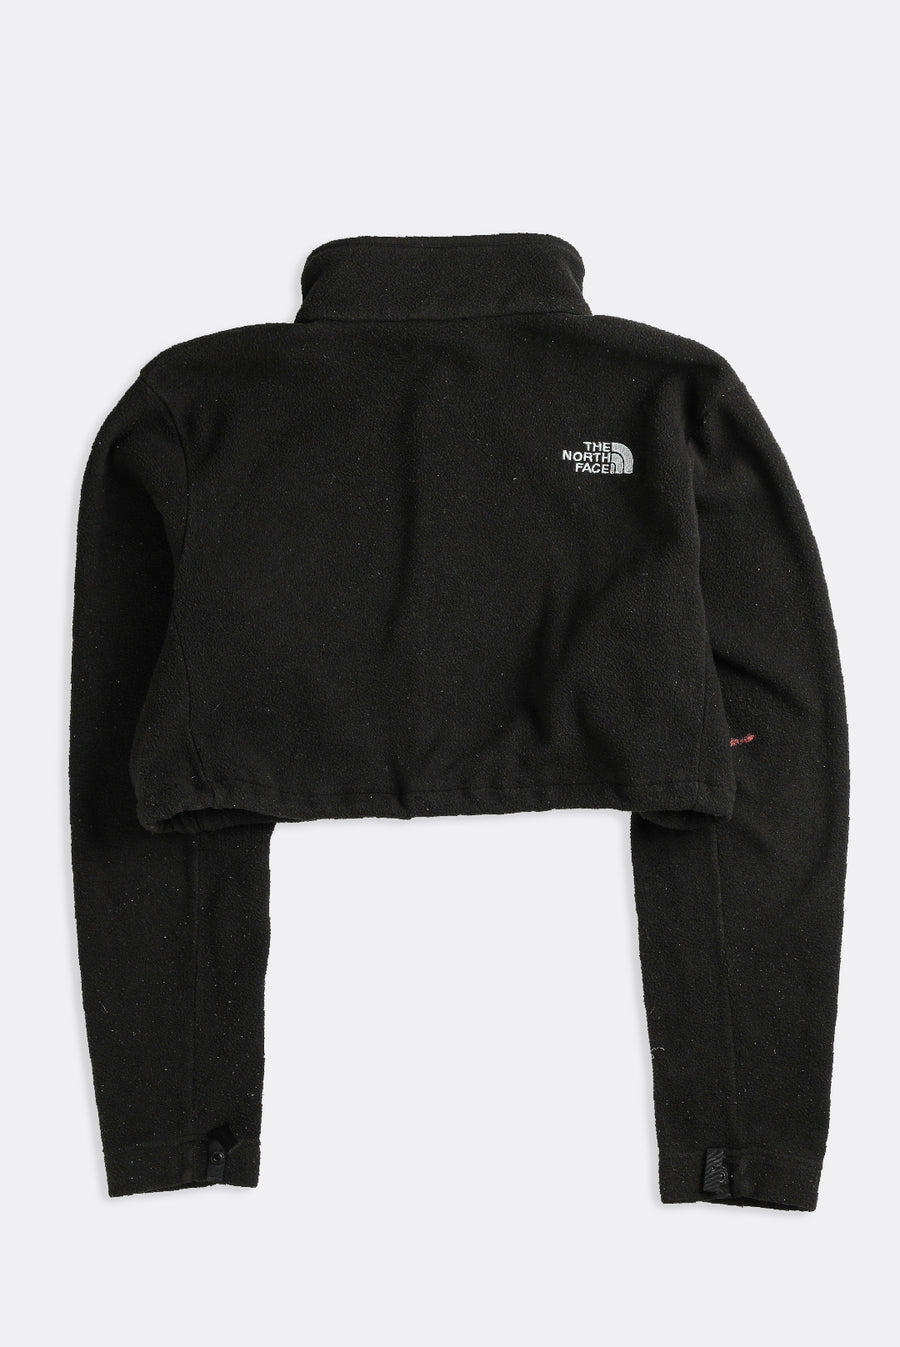 Rework North Face Crop Fleece Jacket - XS, S, M, L, XL